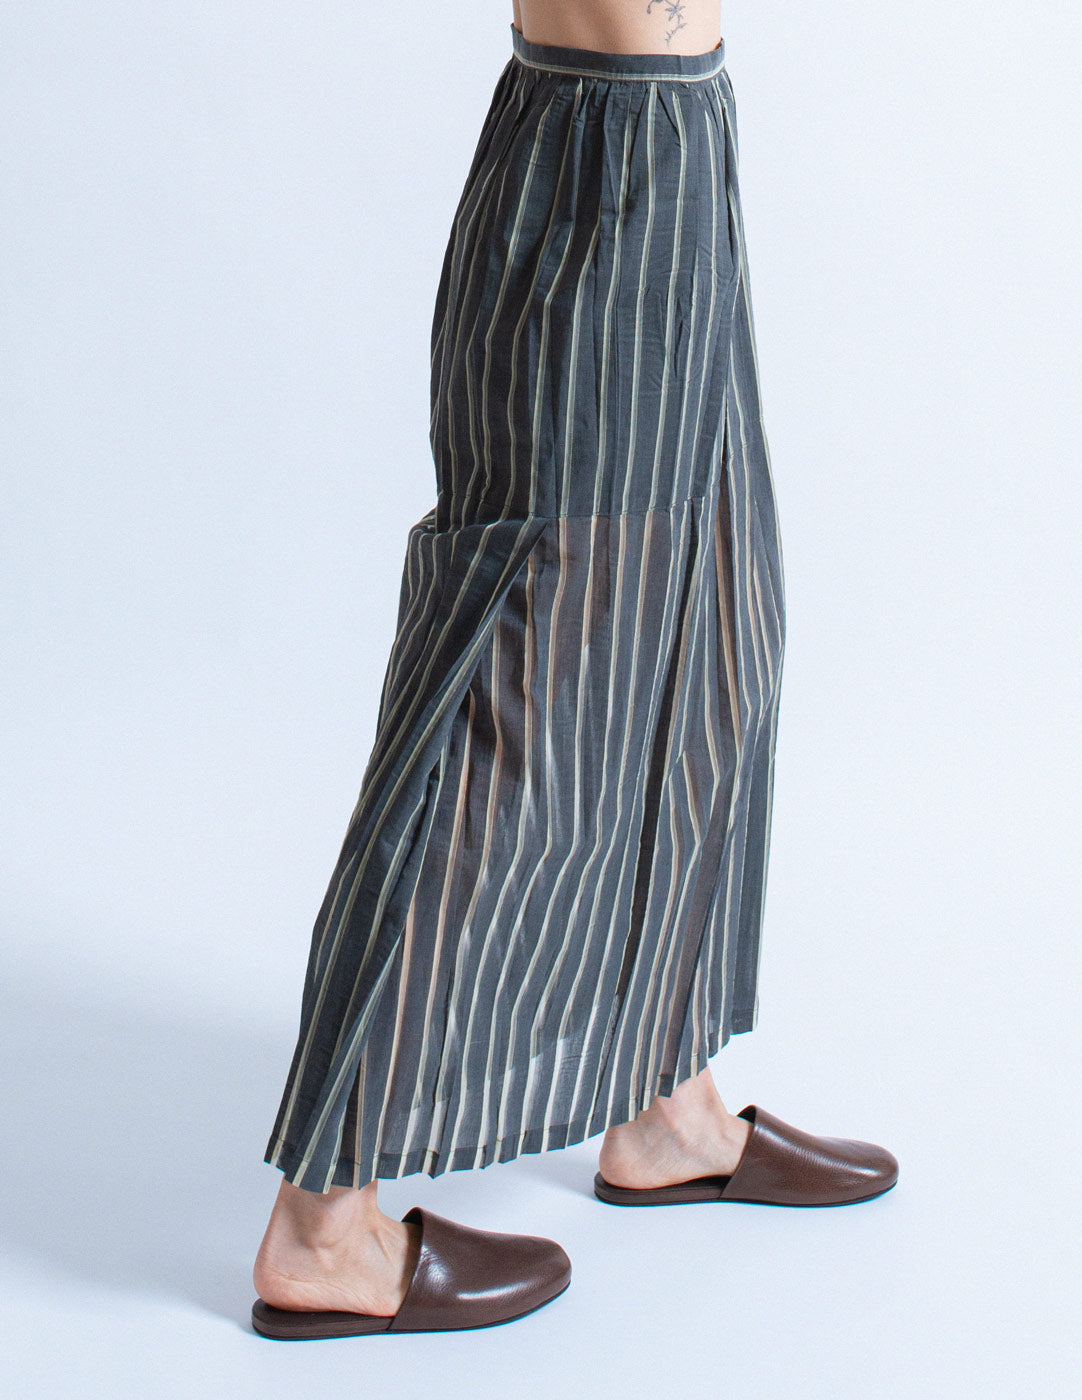 Issey Miyake vintage striped three-piece ensemble skirt detail